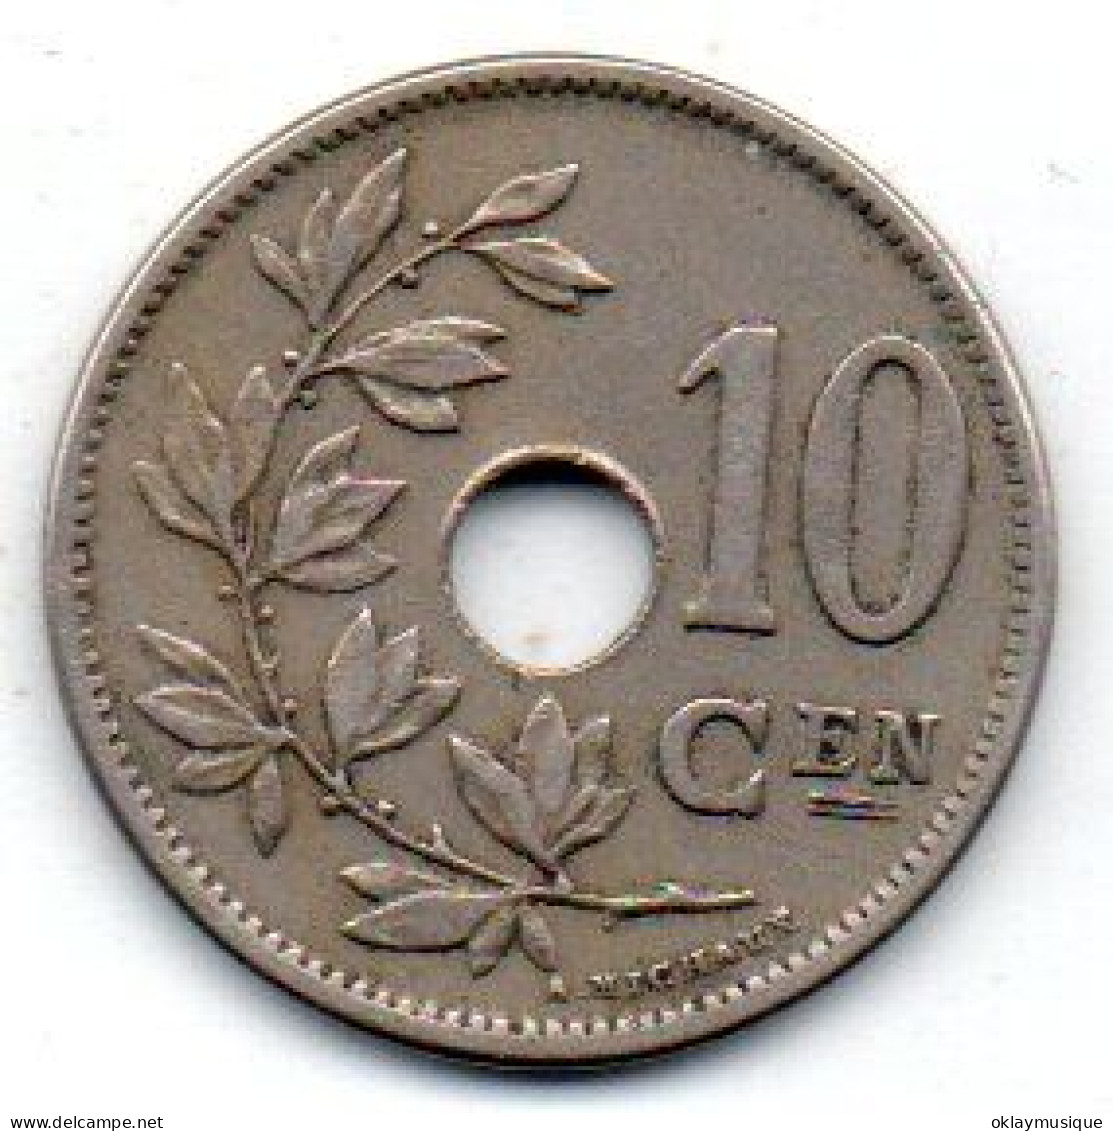 10 Centimes 1904 - 10 Centimes